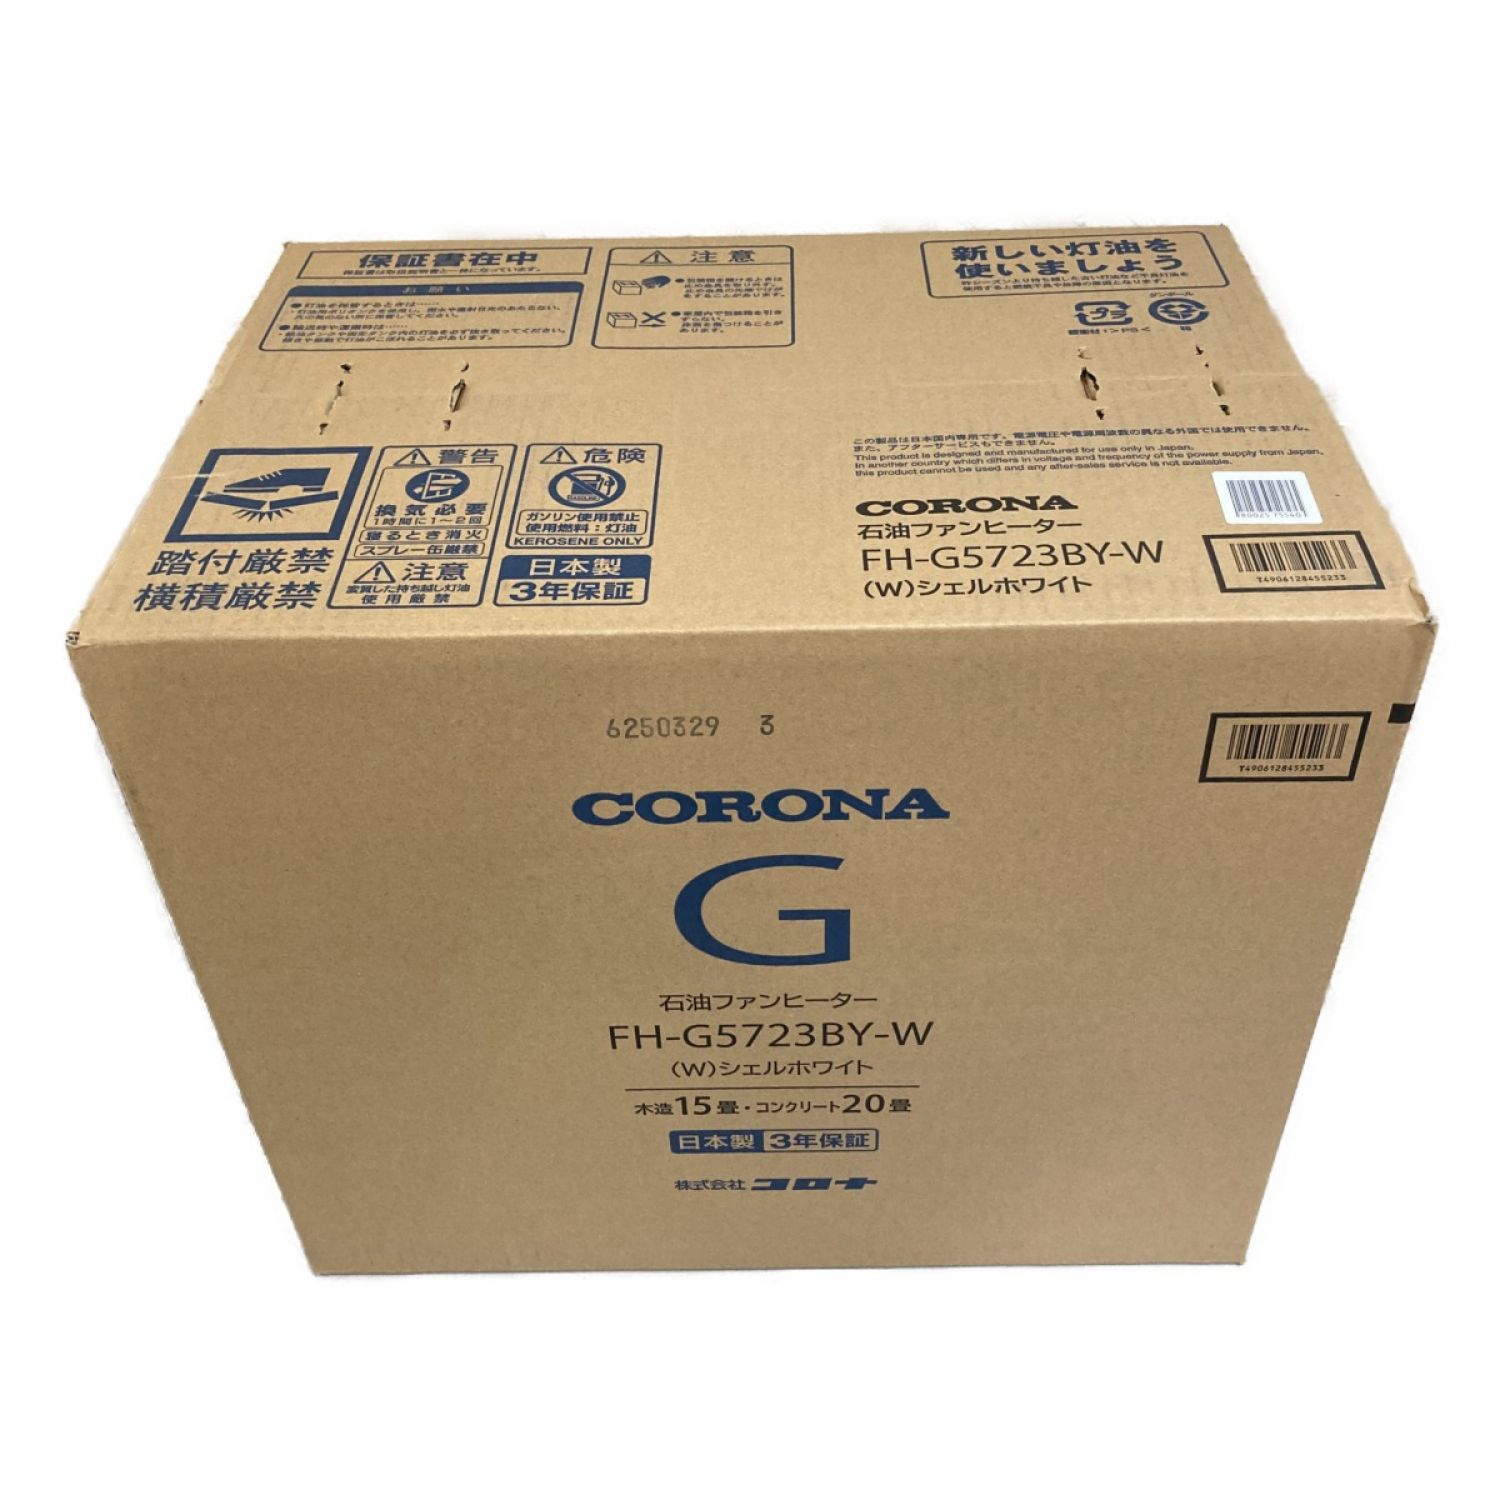 CORONA コロナ G 石油ファンヒーター FH-G5723BY-W シェルホワイト 木造 Nランク